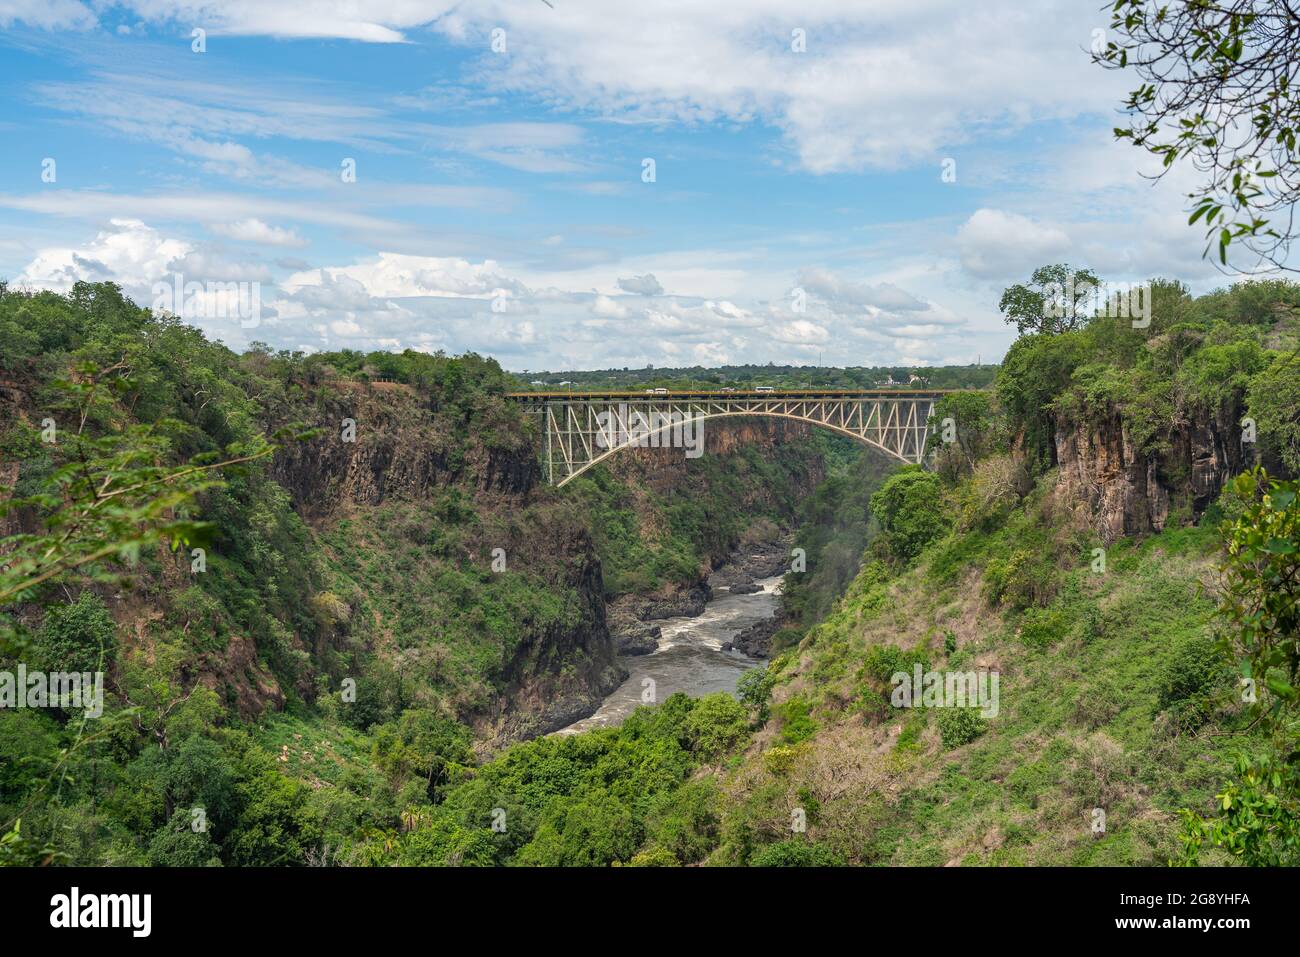 Victoria falls, Zimbabwe, February 05, 2020: Bridge at Victoria Falls, a bungee-jumping hot spot Stock Photo